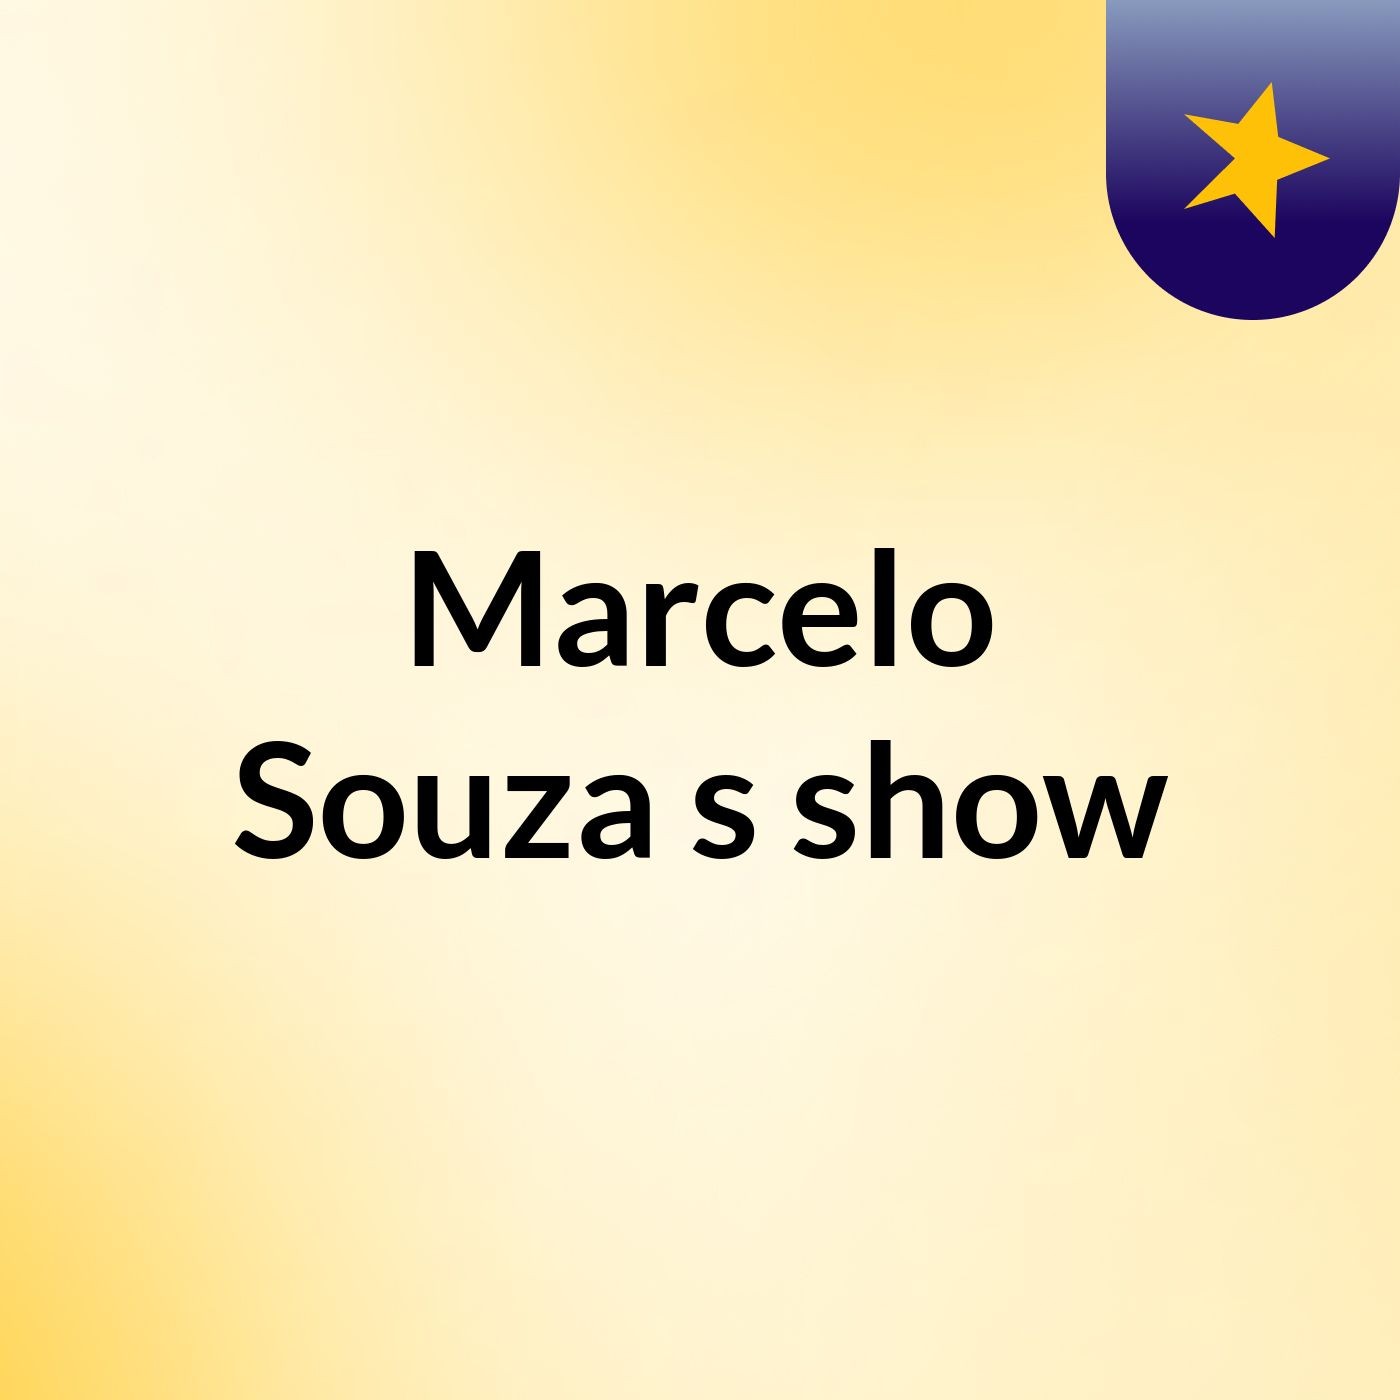 Marcelo Souza's show